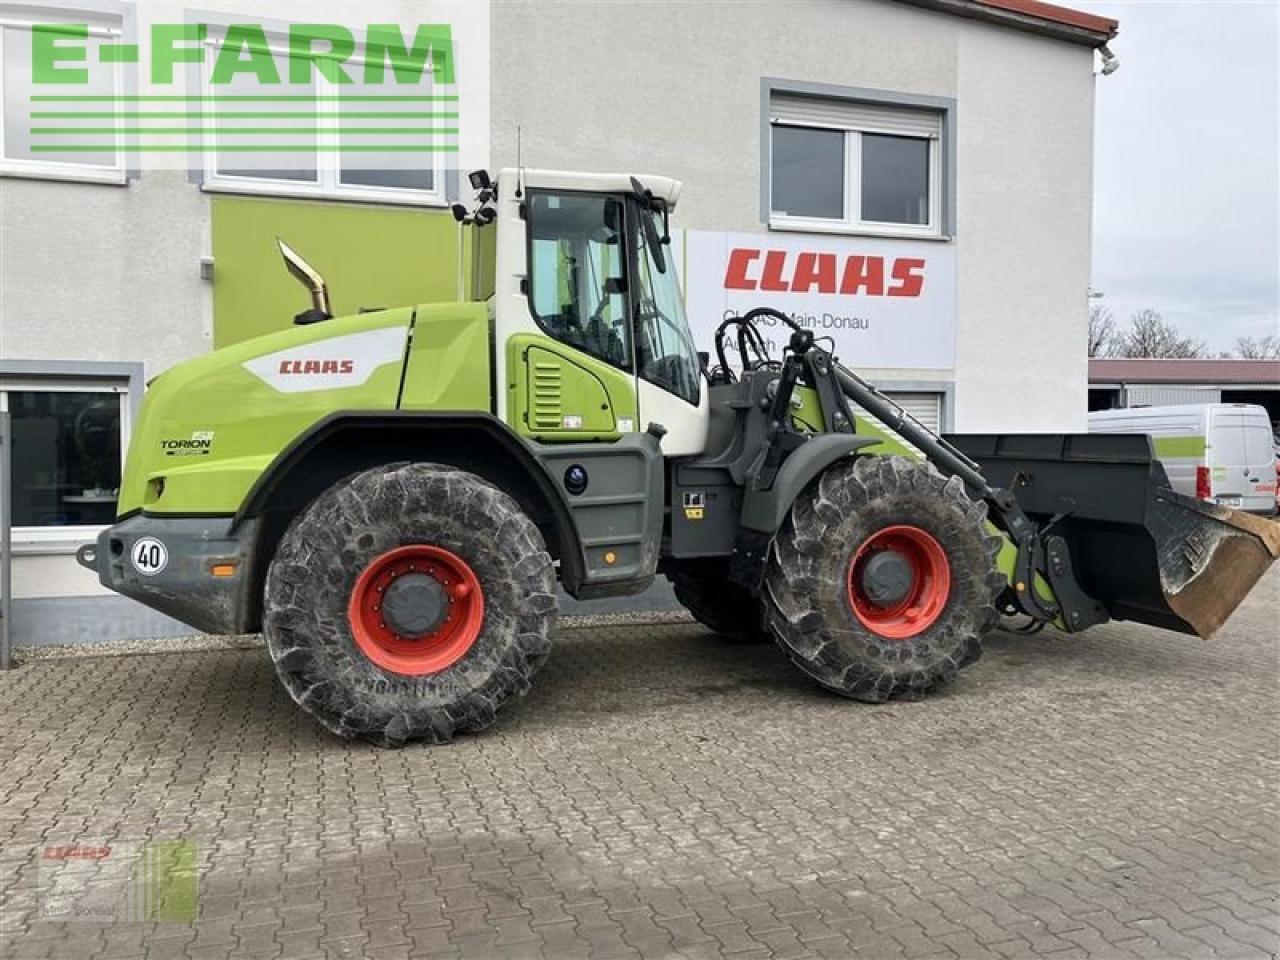 Traktor CLAAS torion 1511